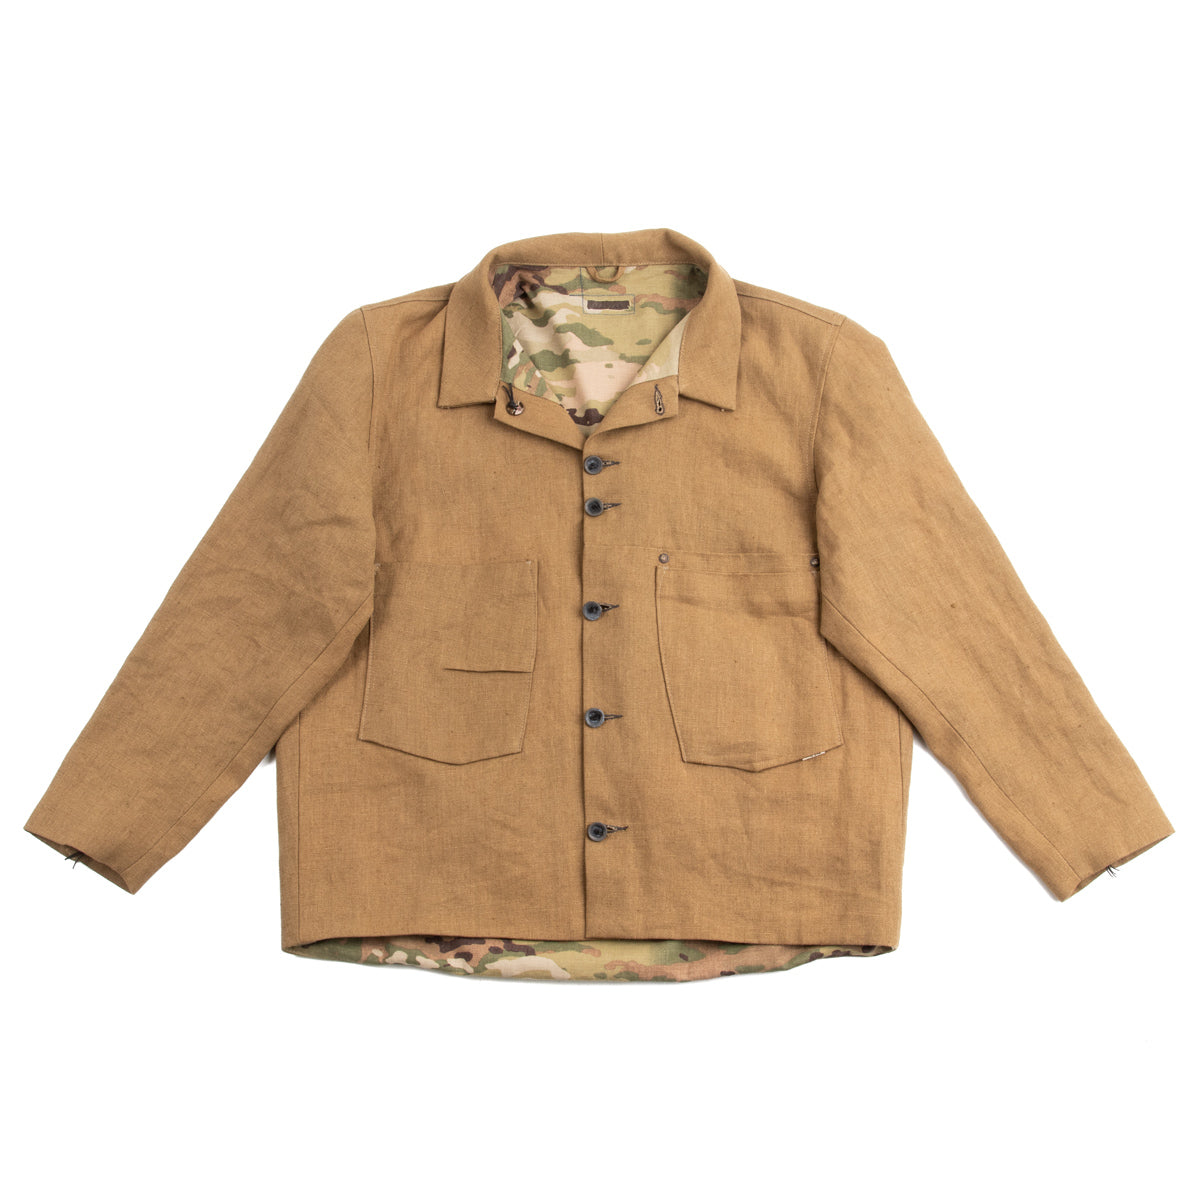 Supreme Patch Denim Jacket Size: Medium for $300! -Palm Angels